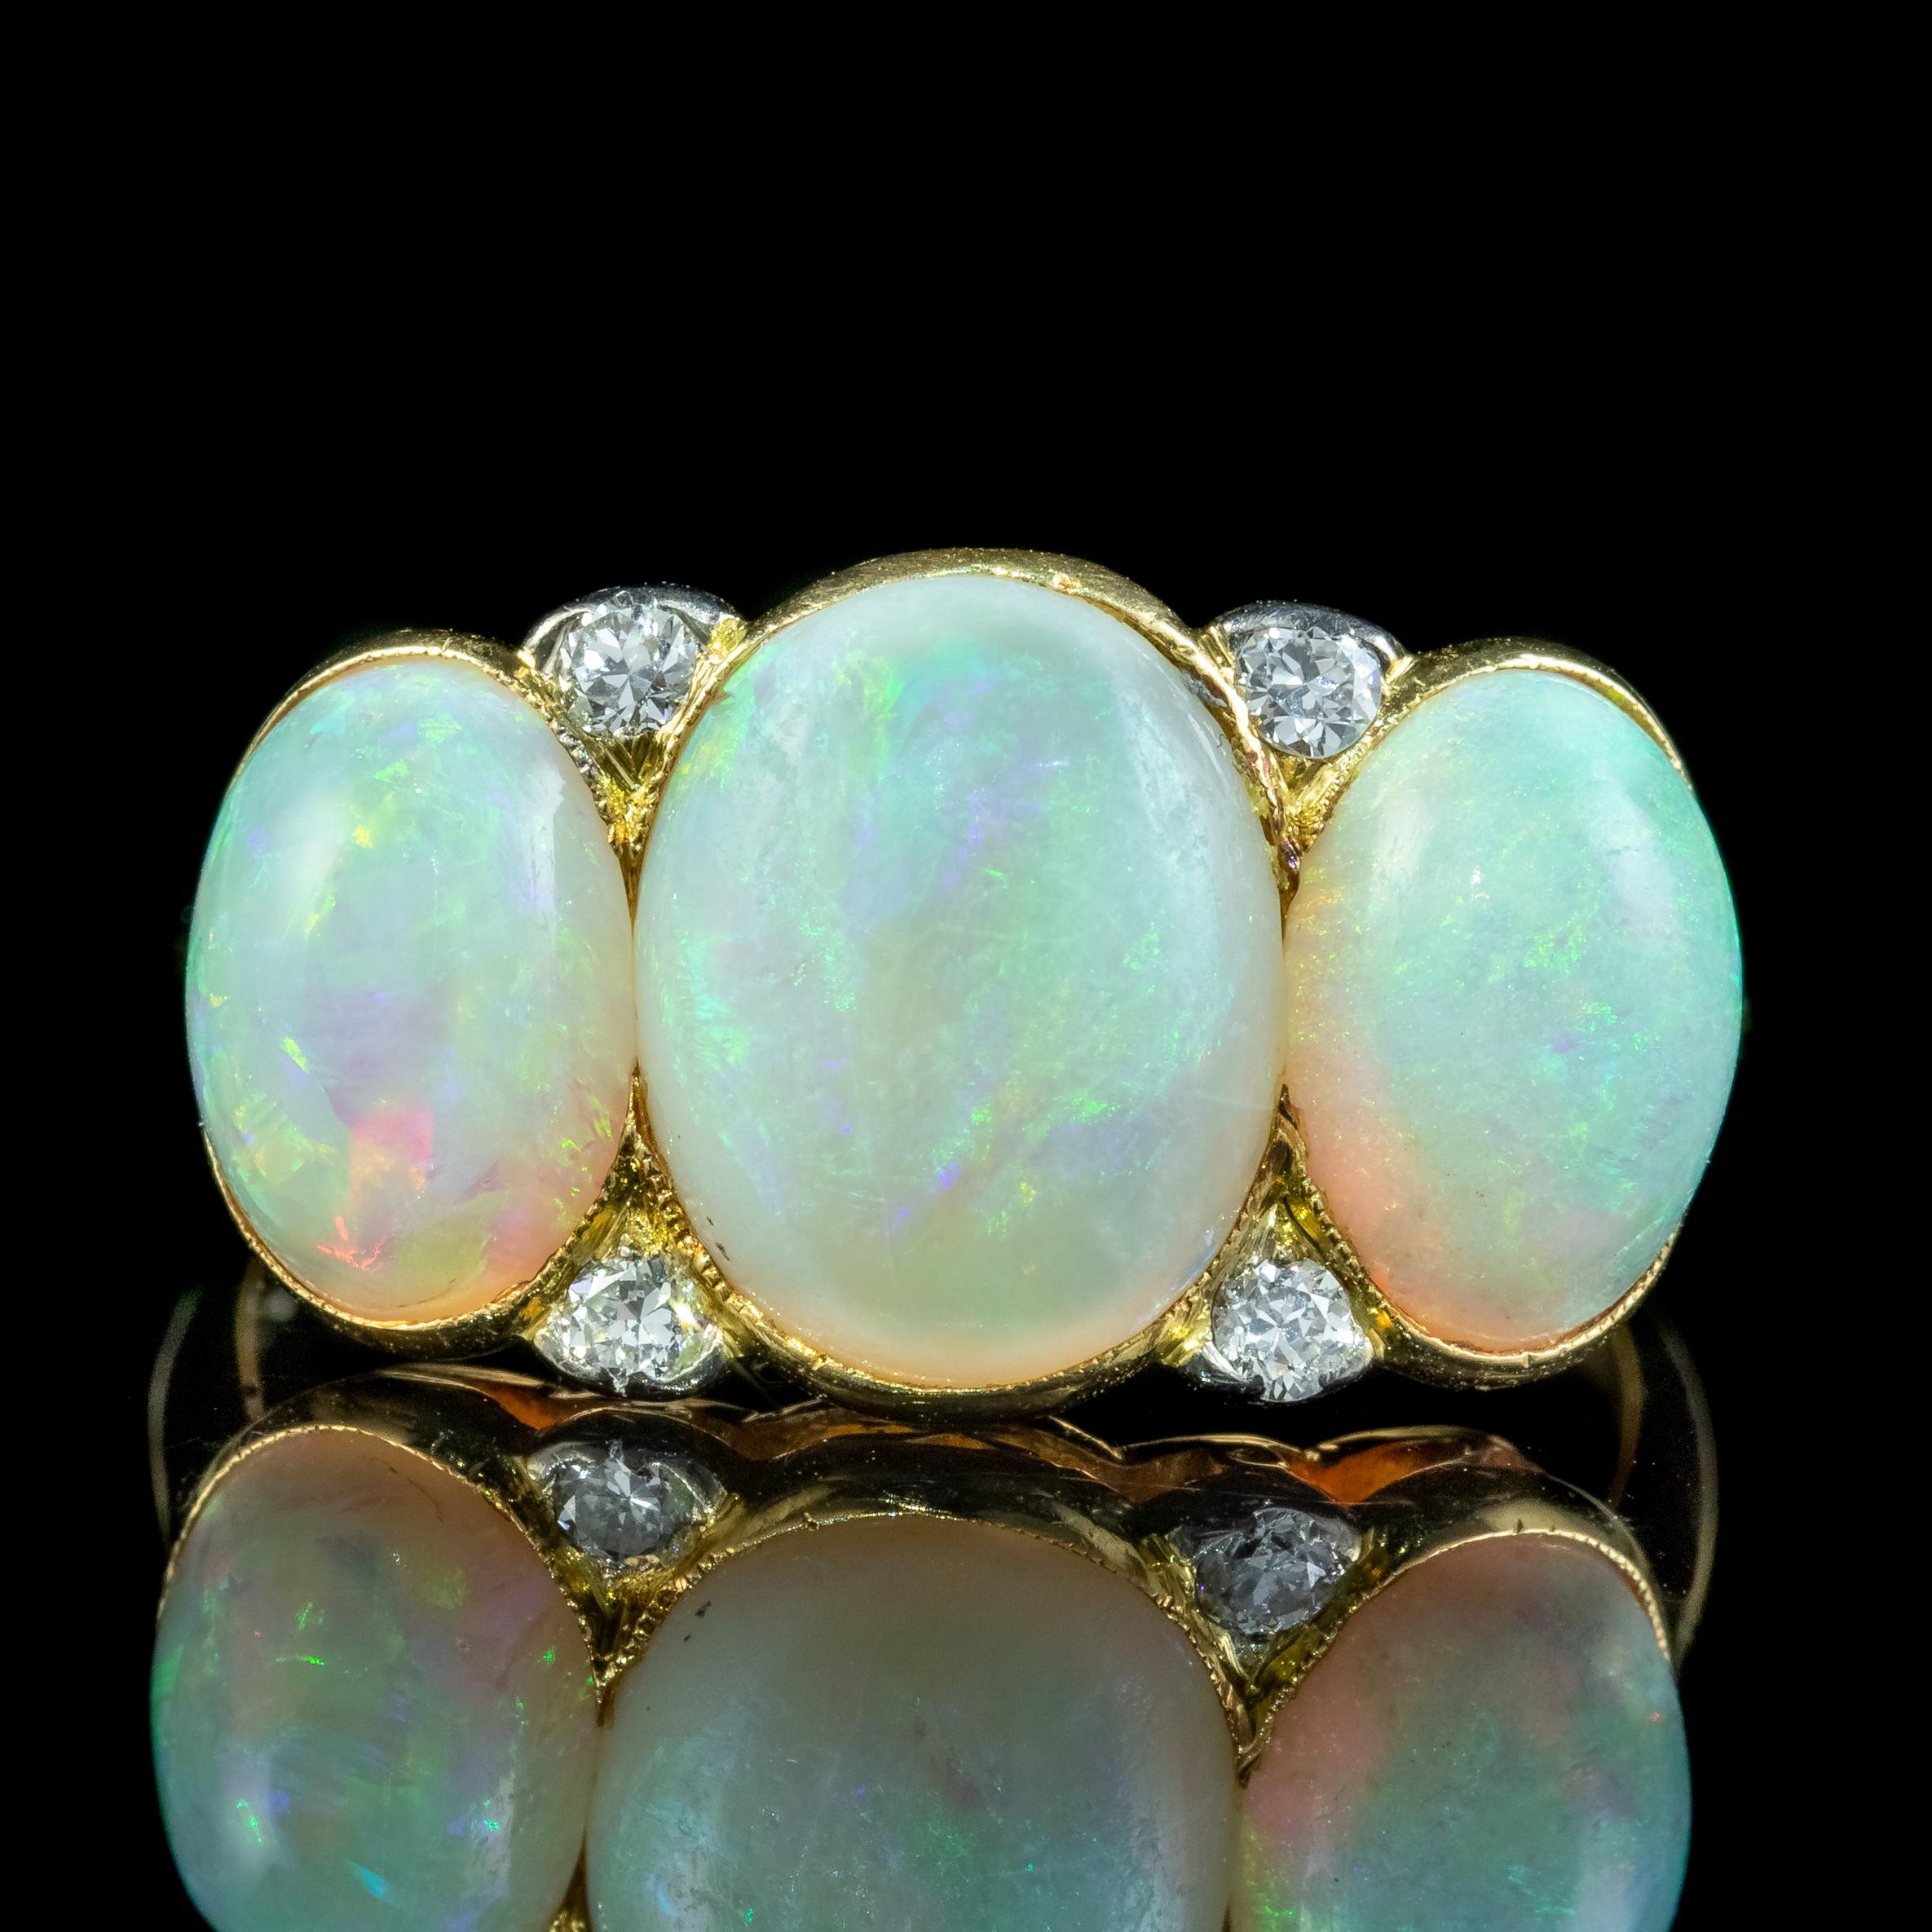 7 carat opal ring